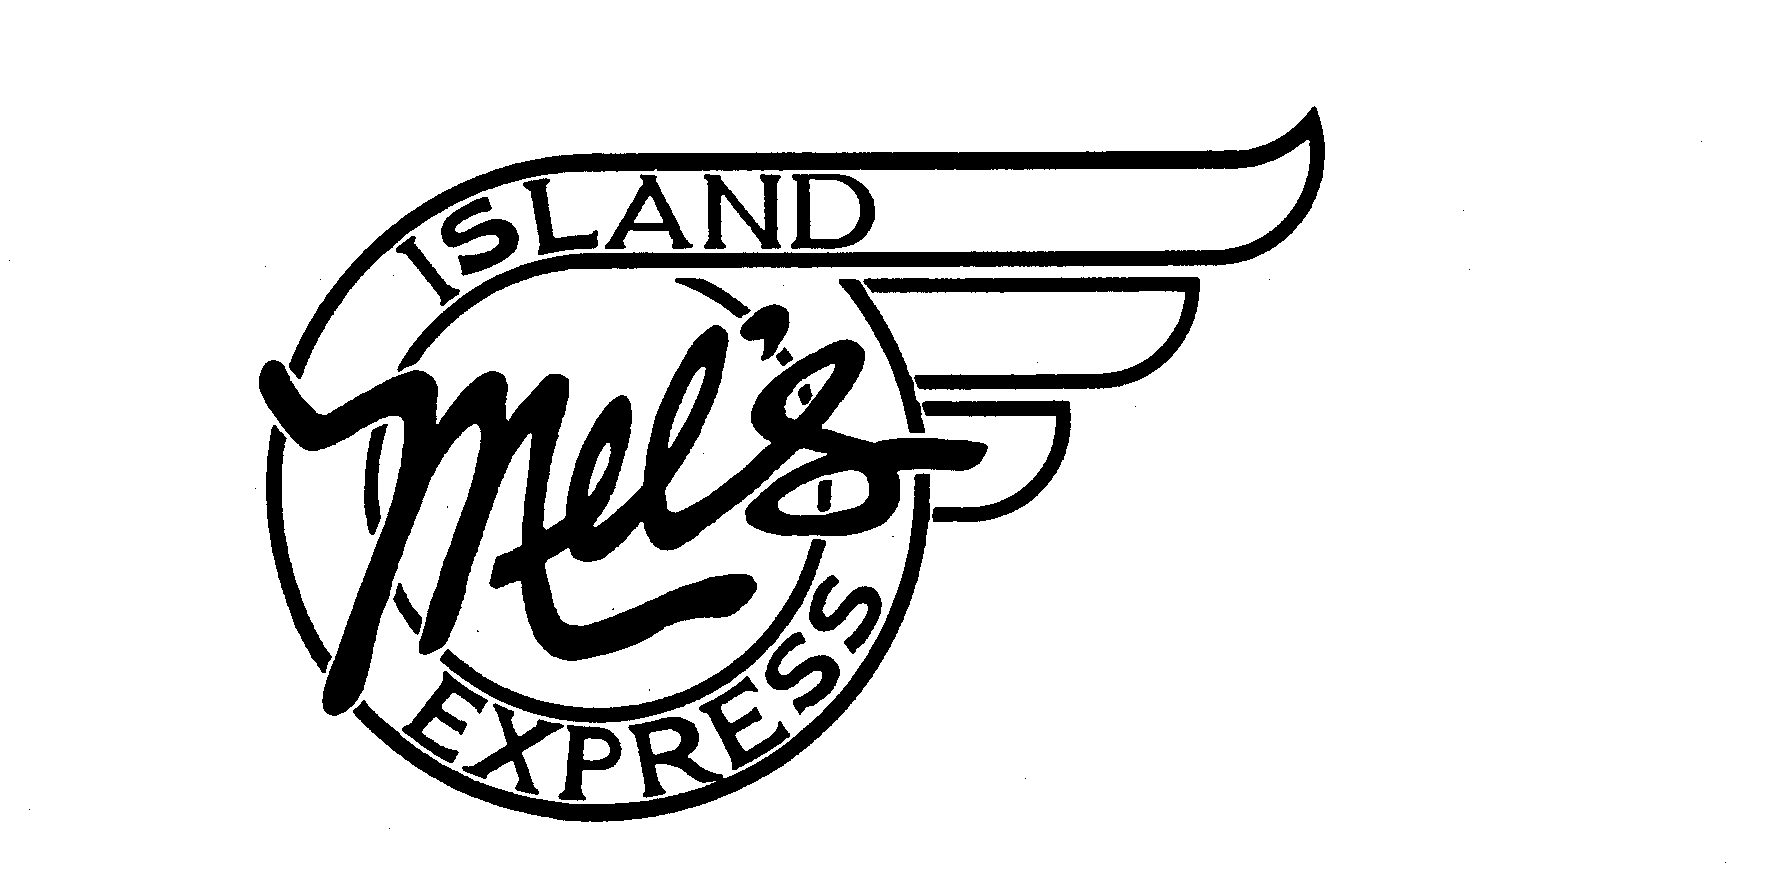  MEL'S ISLAND EXPRESS